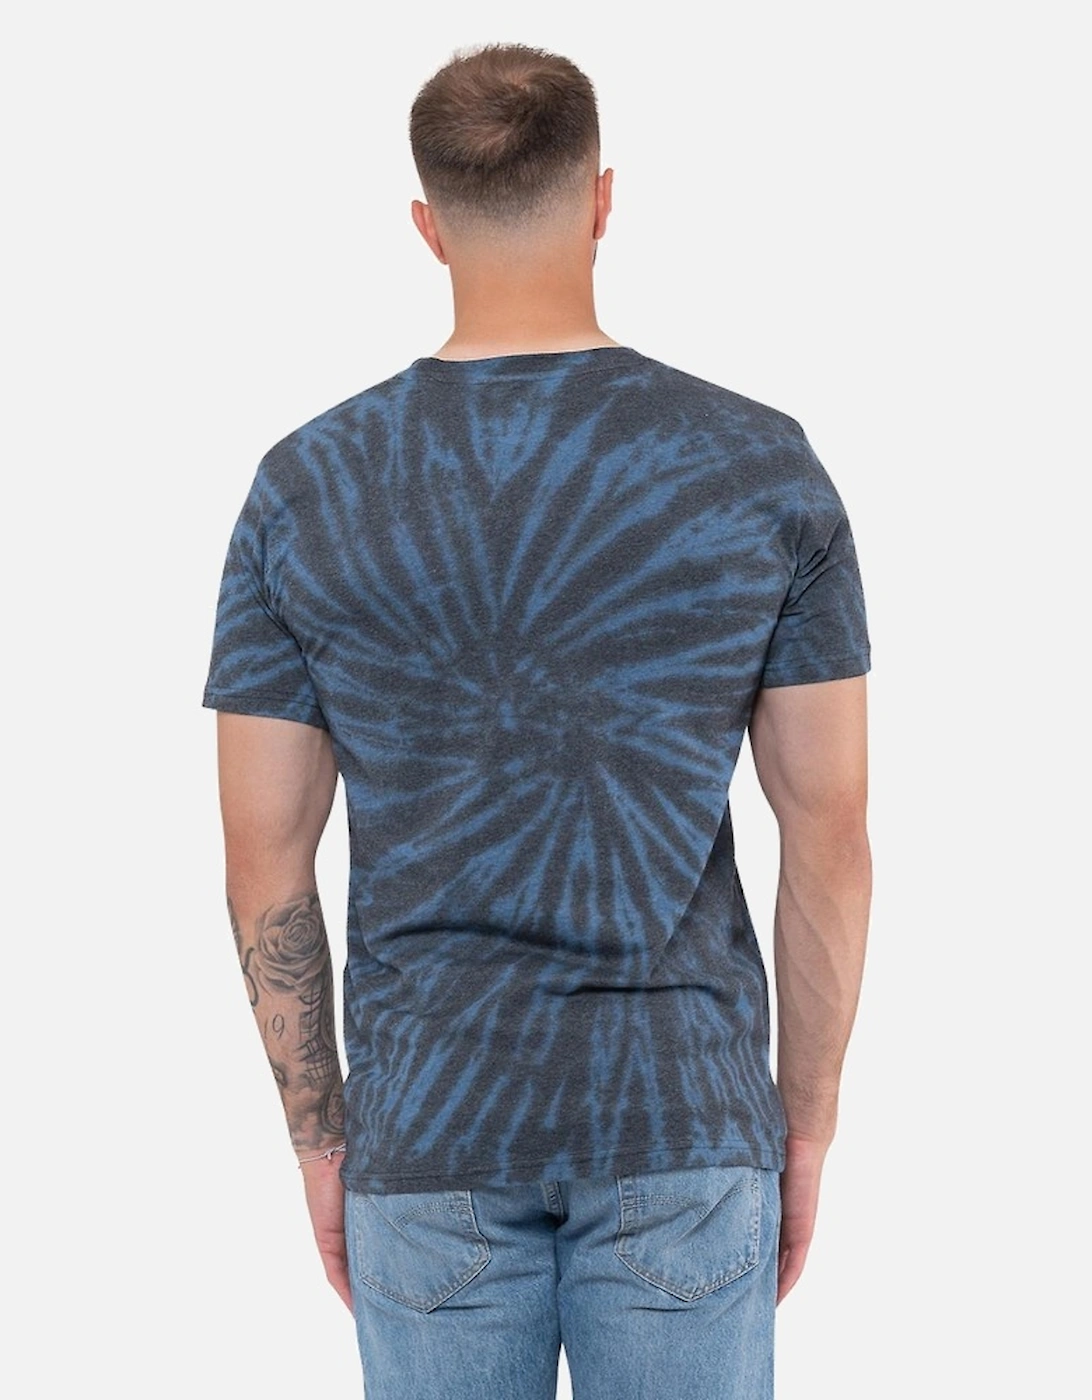 Unisex Adult Let It Be Silhouette Tie Dye T-Shirt